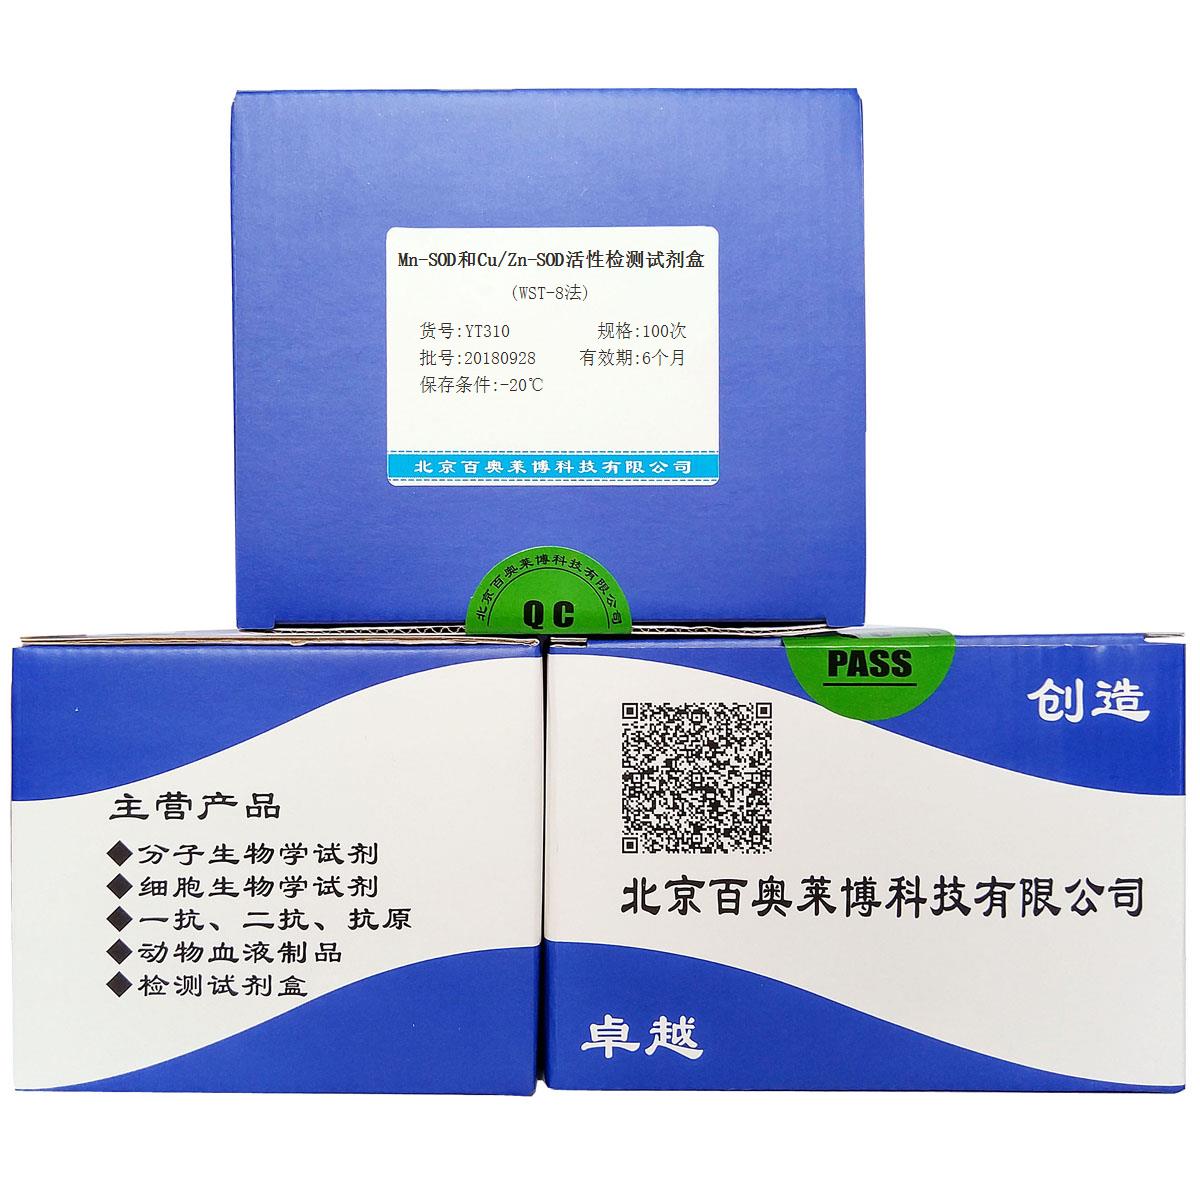 Mn-SOD和Cu/Zn-SOD活性检测试剂盒(WST-8法)